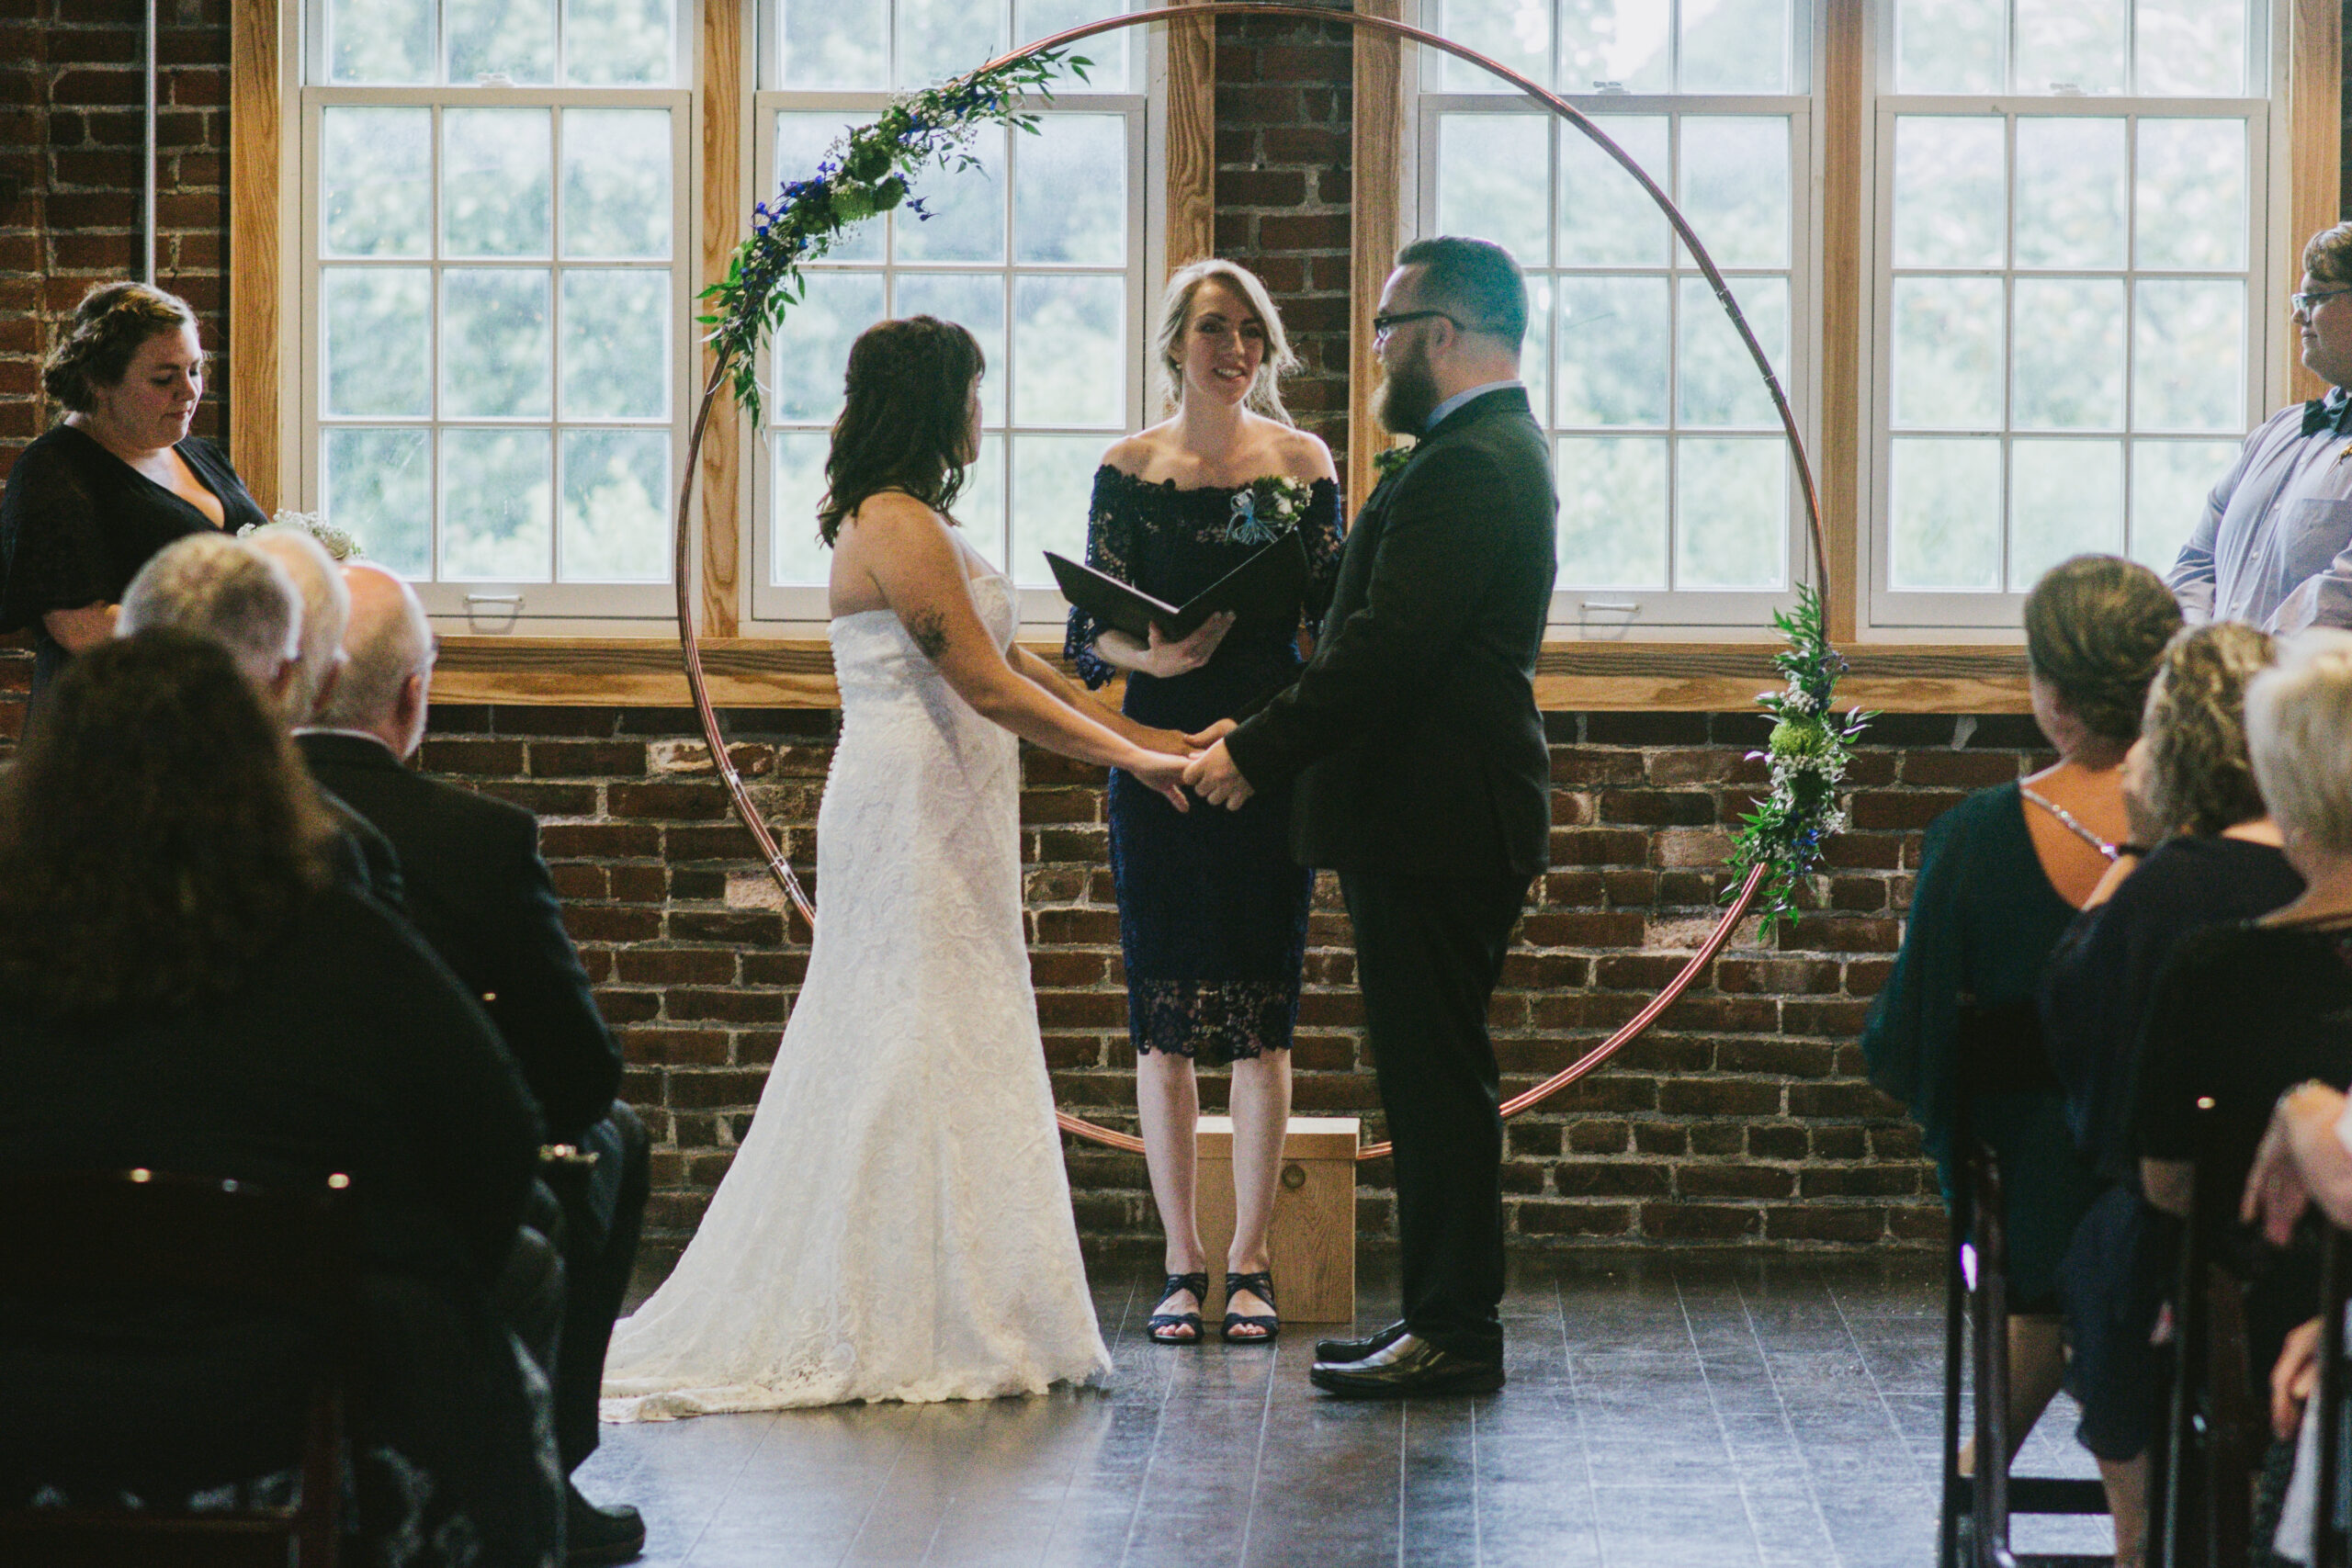 Tinker House Arch Backdrop Wedding Ceremony